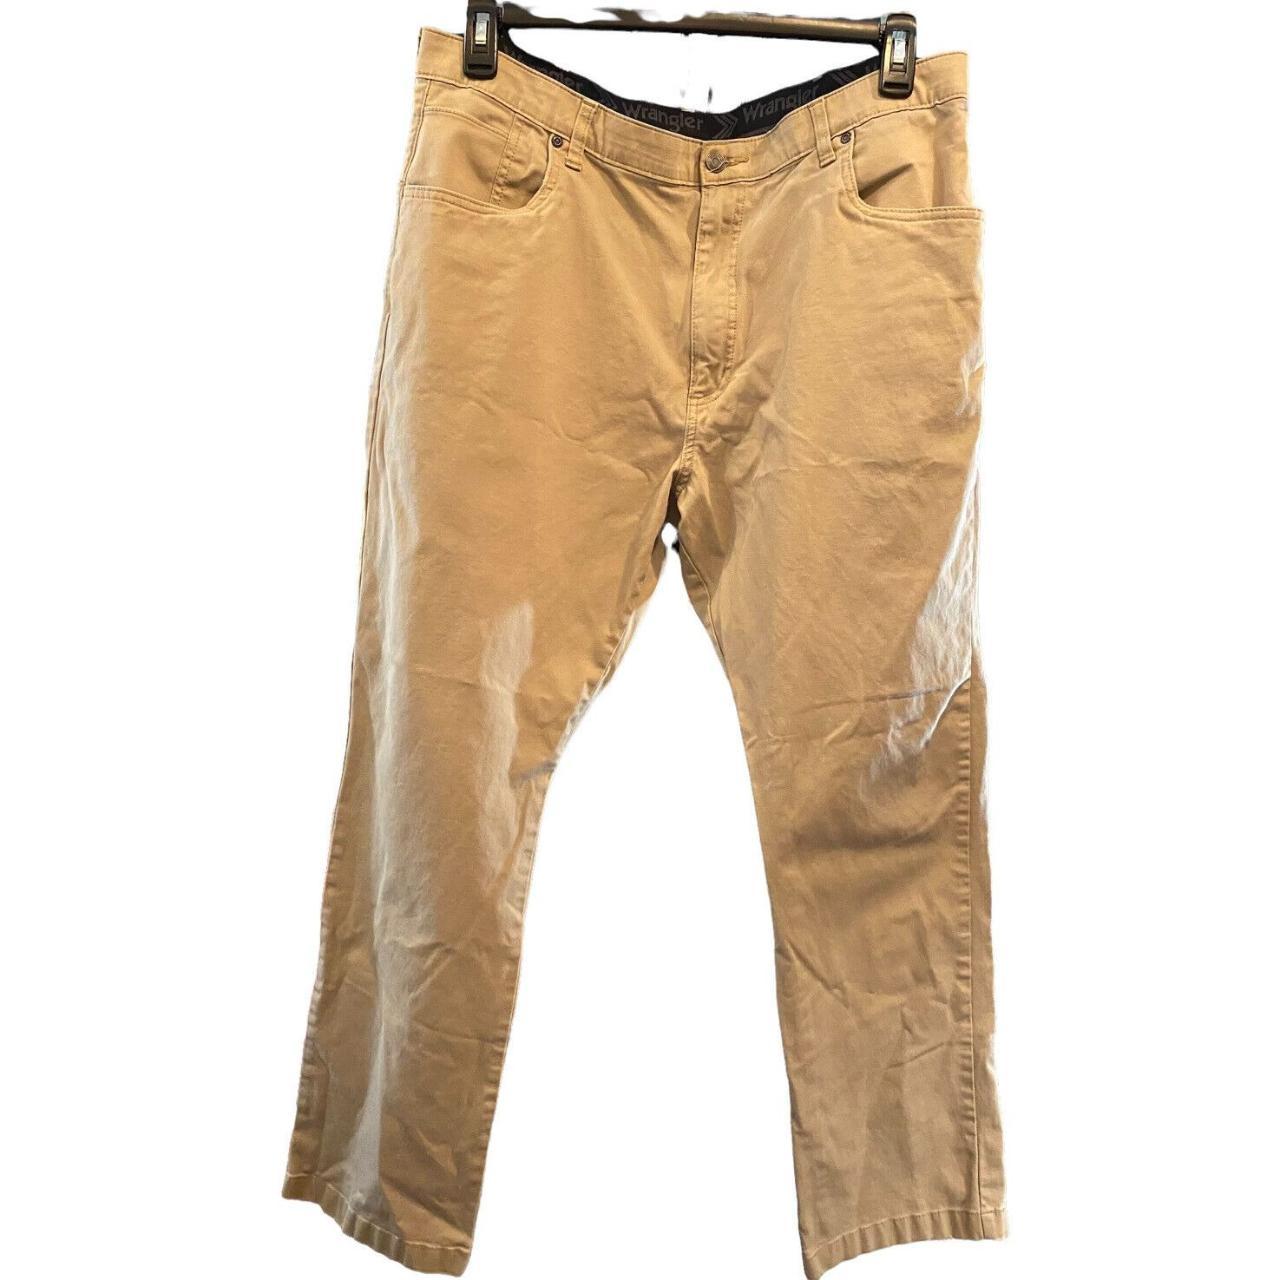 Wrangler Pants Mens Size 38x30. Good condition. No... - Depop